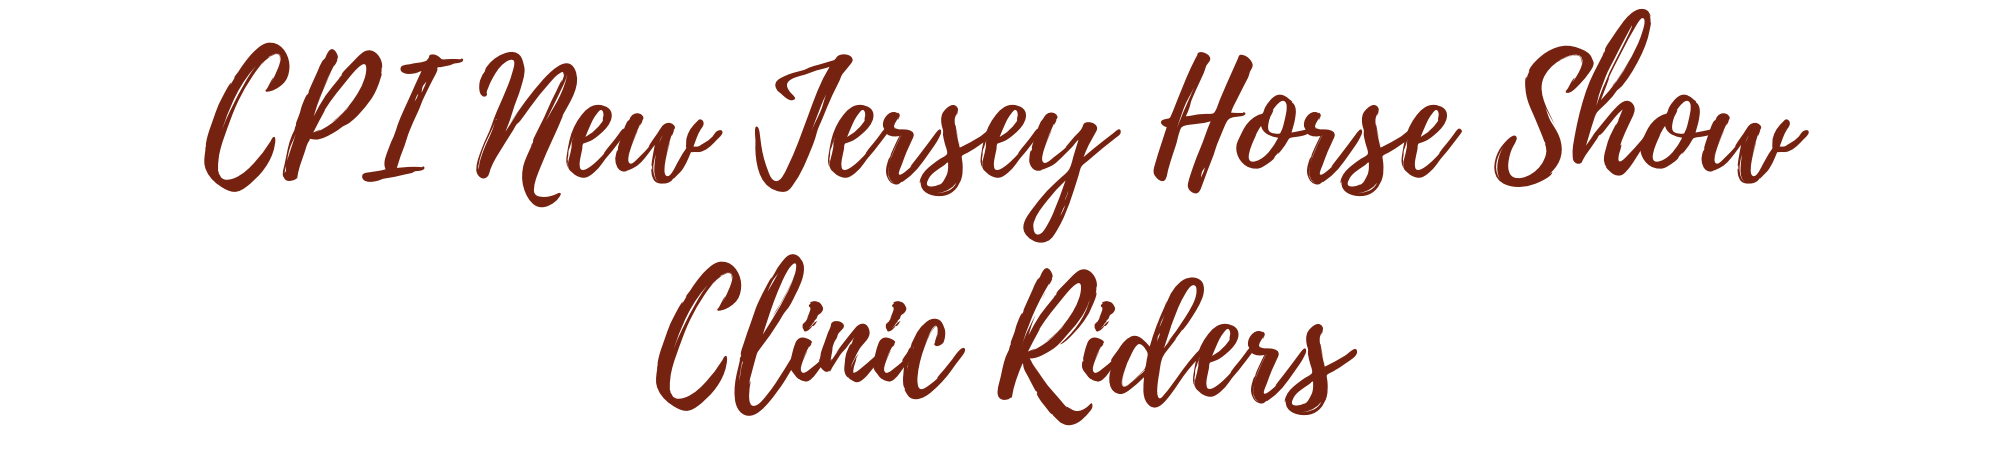 CPI New Jersey Clinic Riders - 8.5 x 2